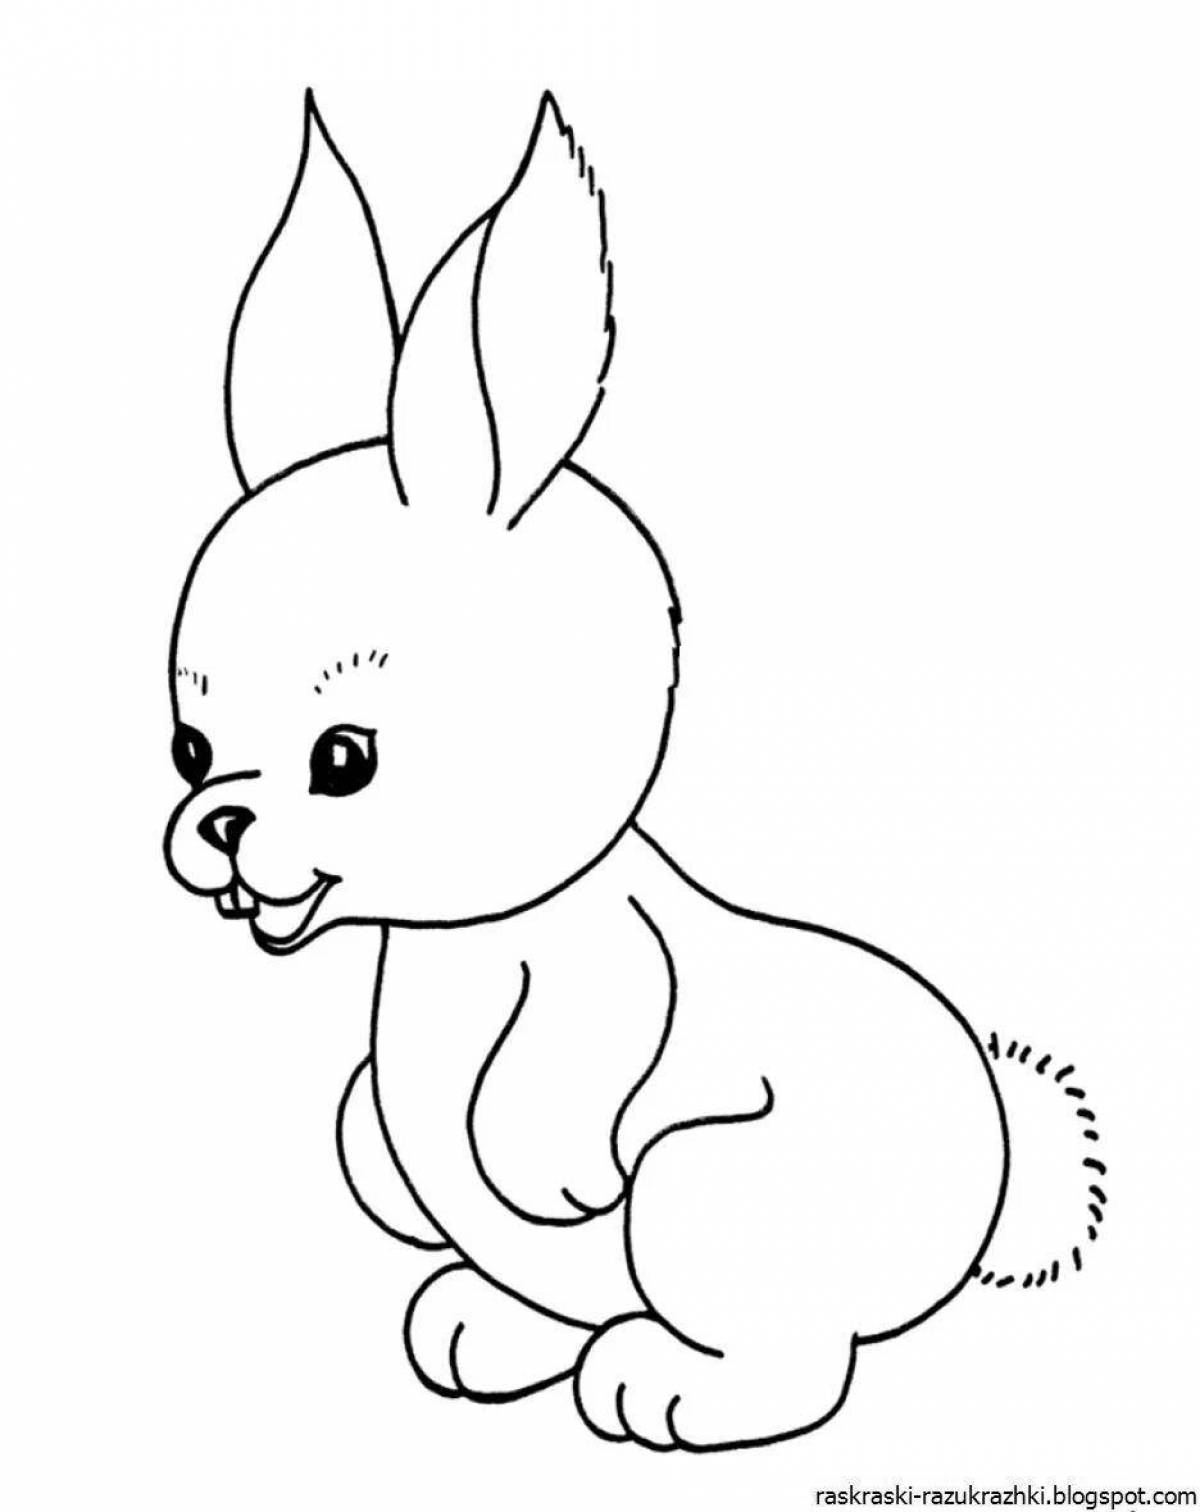 Sweet rabbit coloring